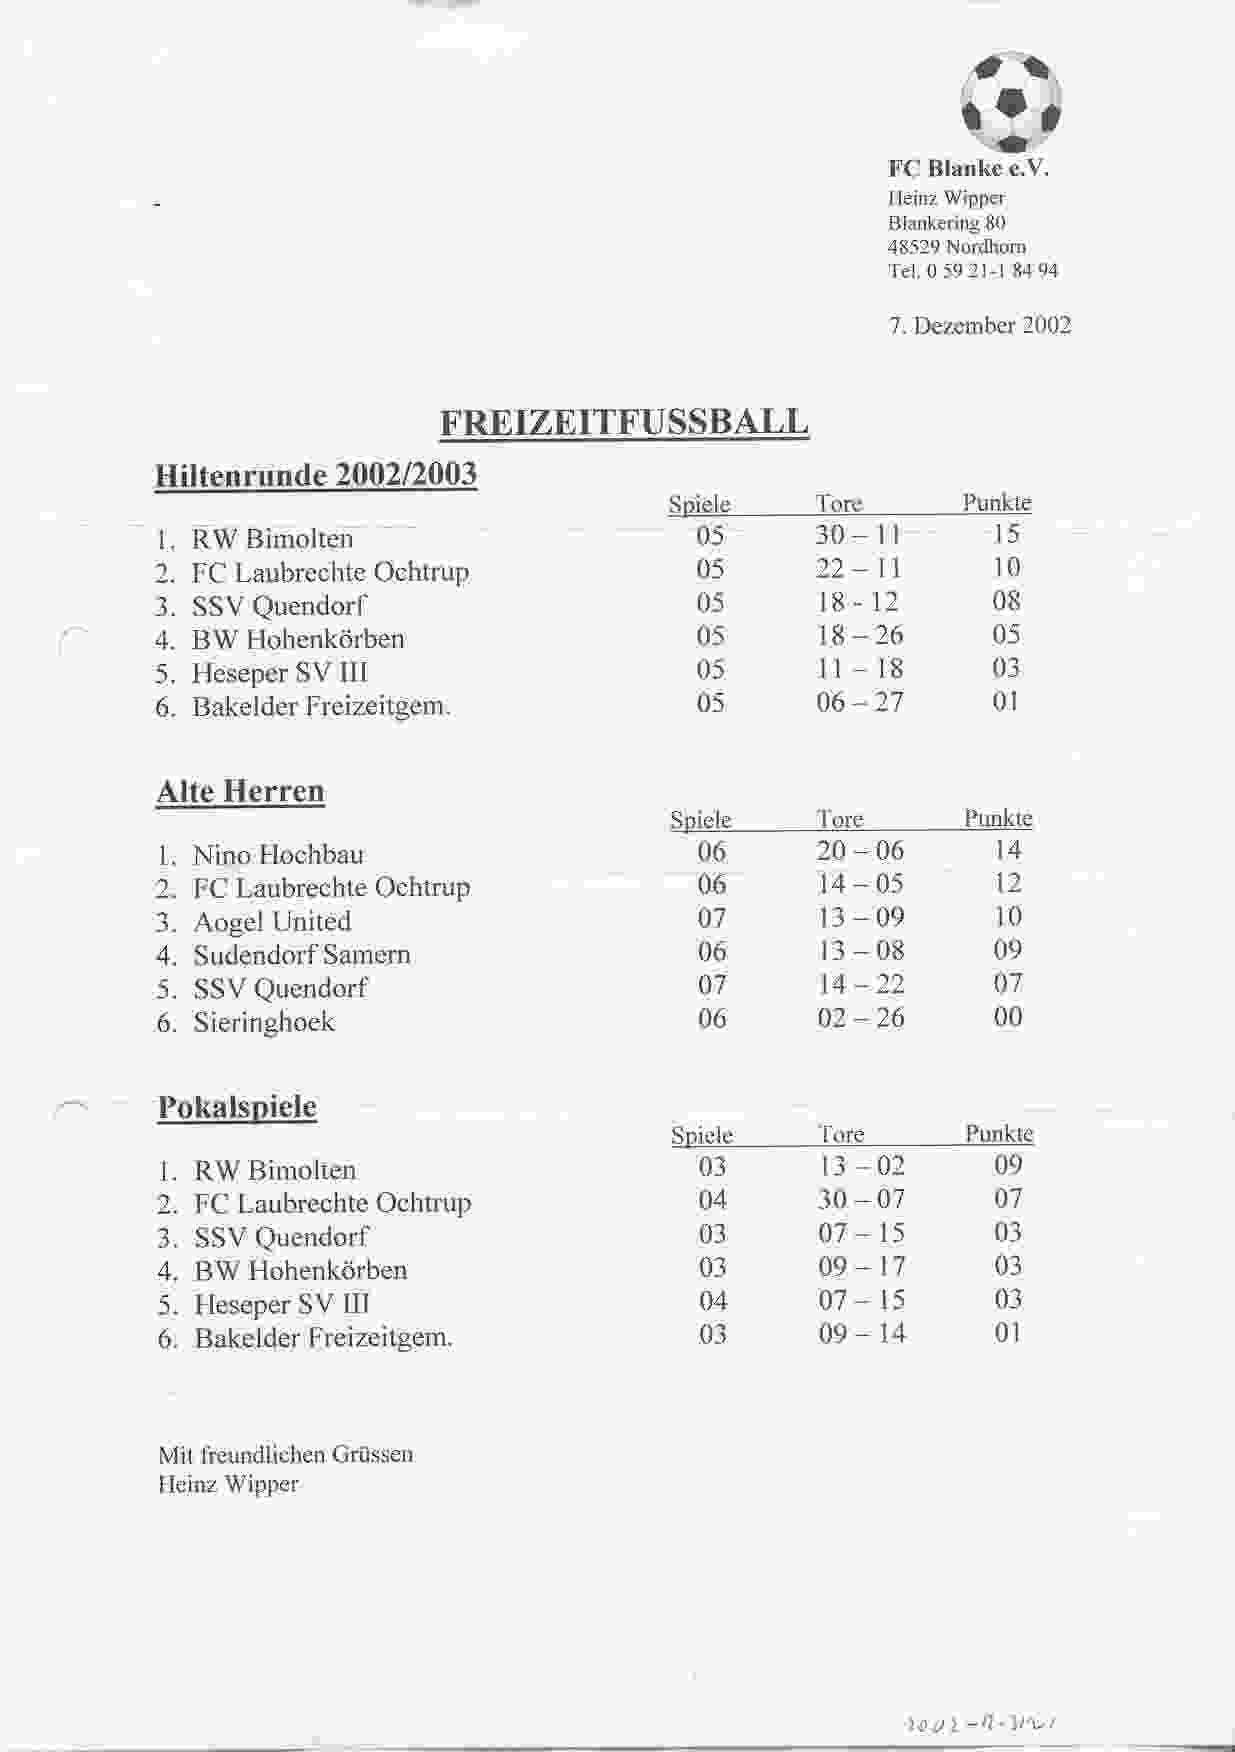 Tussenbalans beker en competitie seizoen 2001/2002